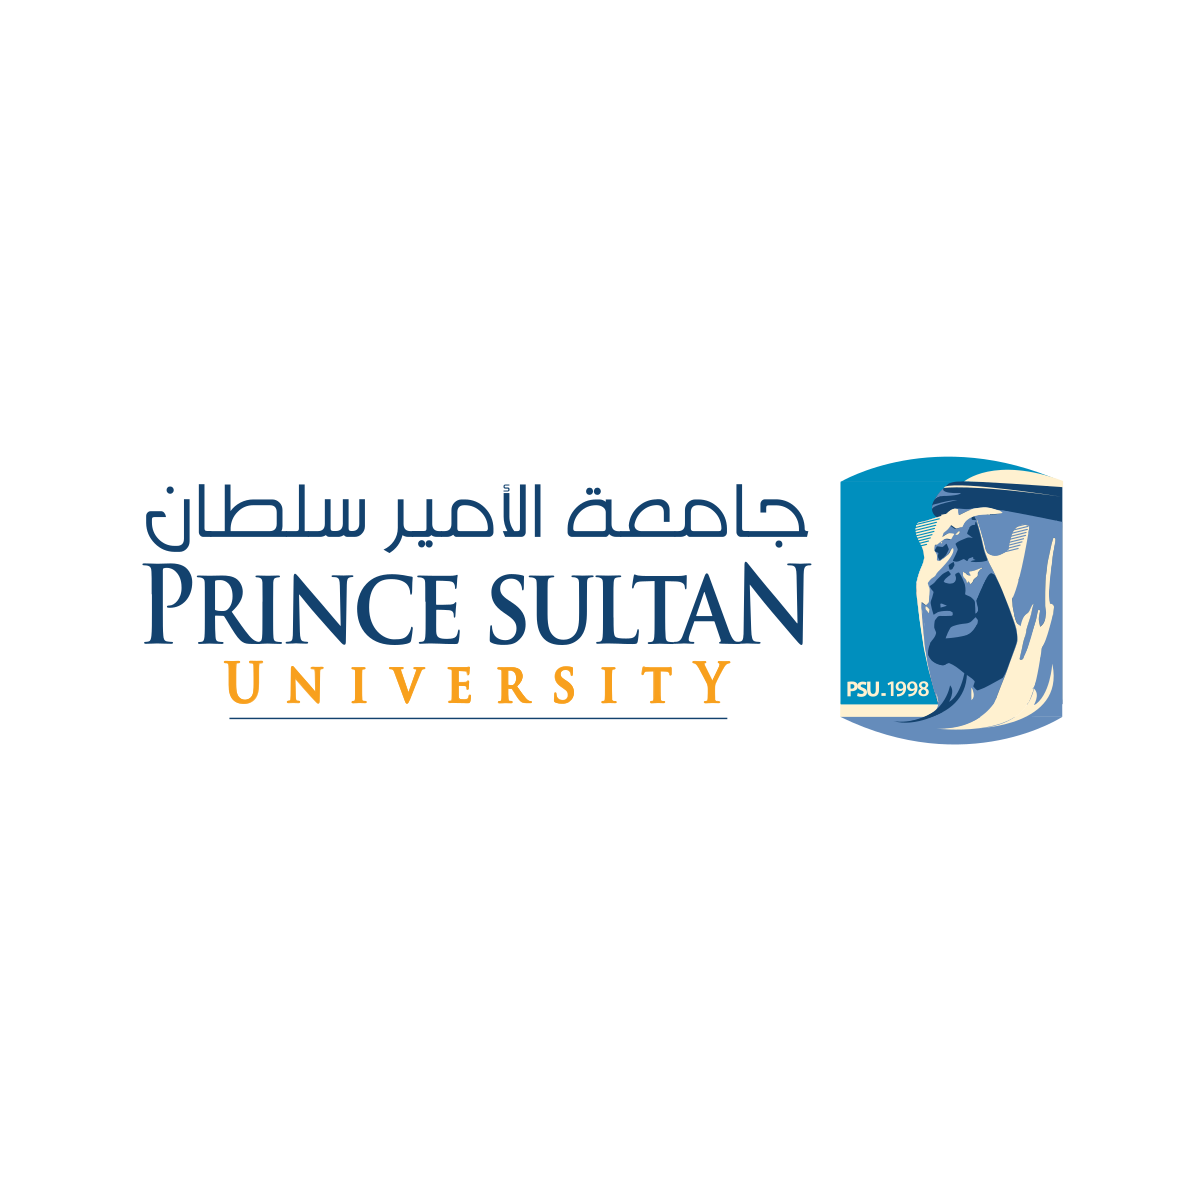 1200px Prince Sultan University logo.svg  1 - وظائف شاغرة لدى جامعة الأمير سلطان بعدة تخصصات